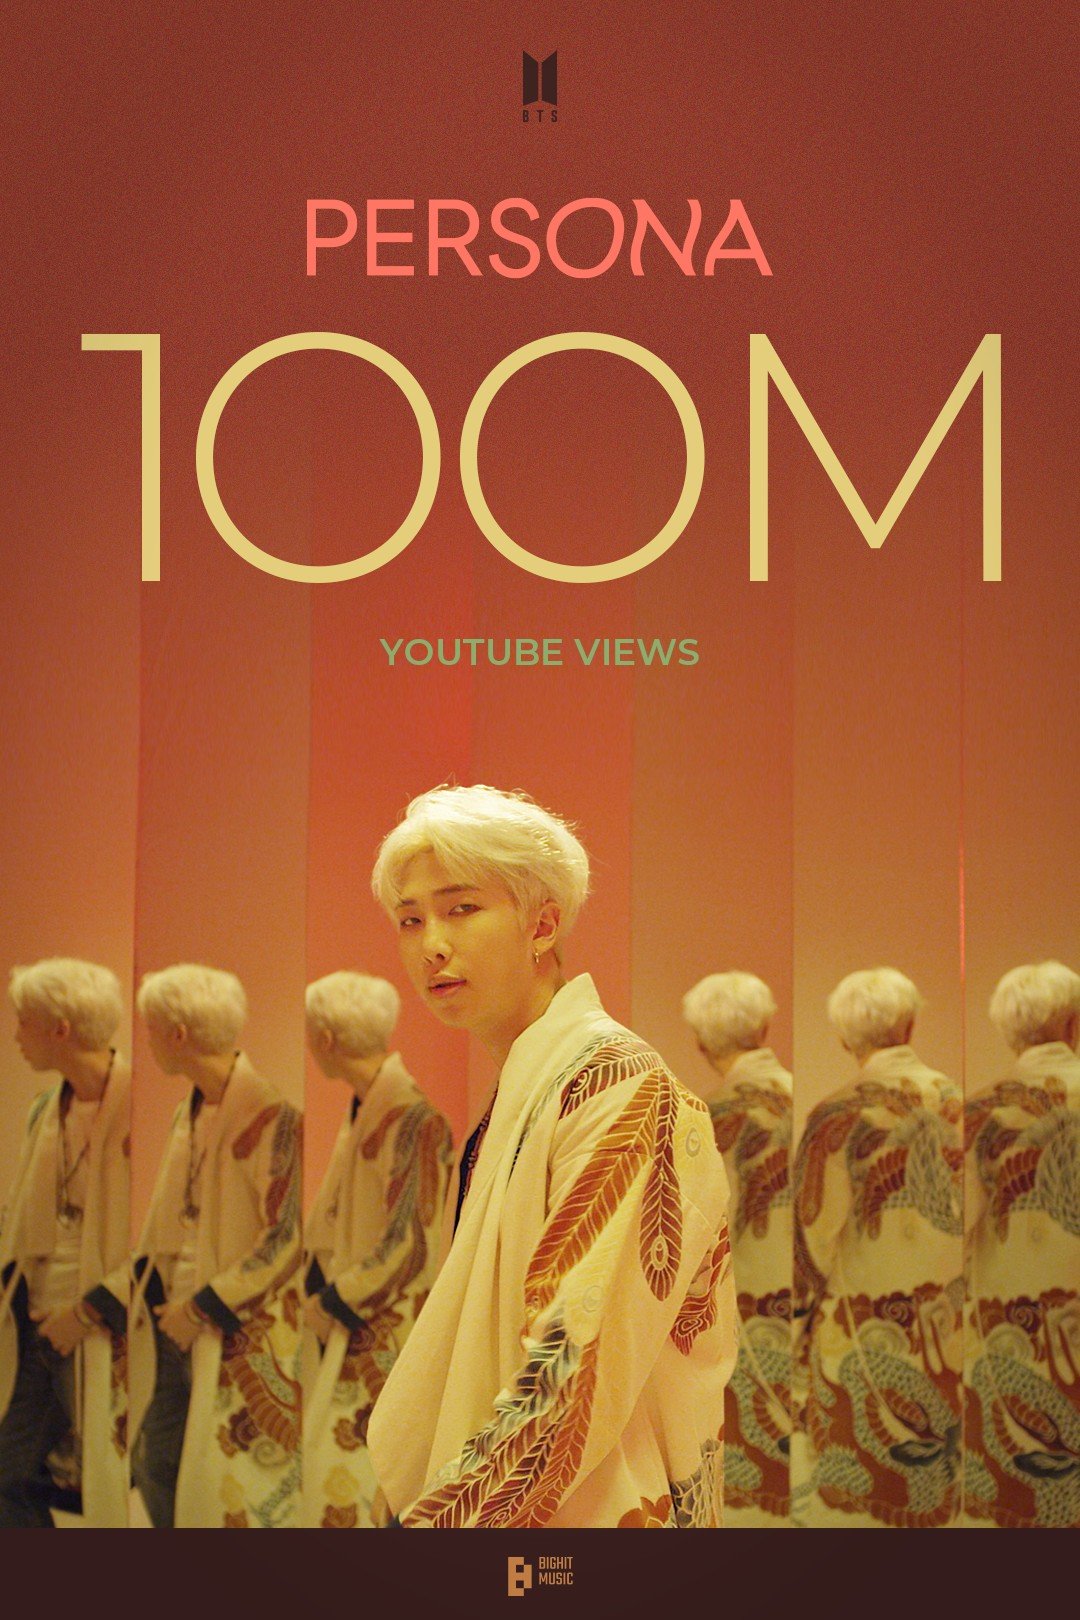 BTS RM ‘Intro : Persona’ 컴백 트레일러, 1억 뷰 돌파